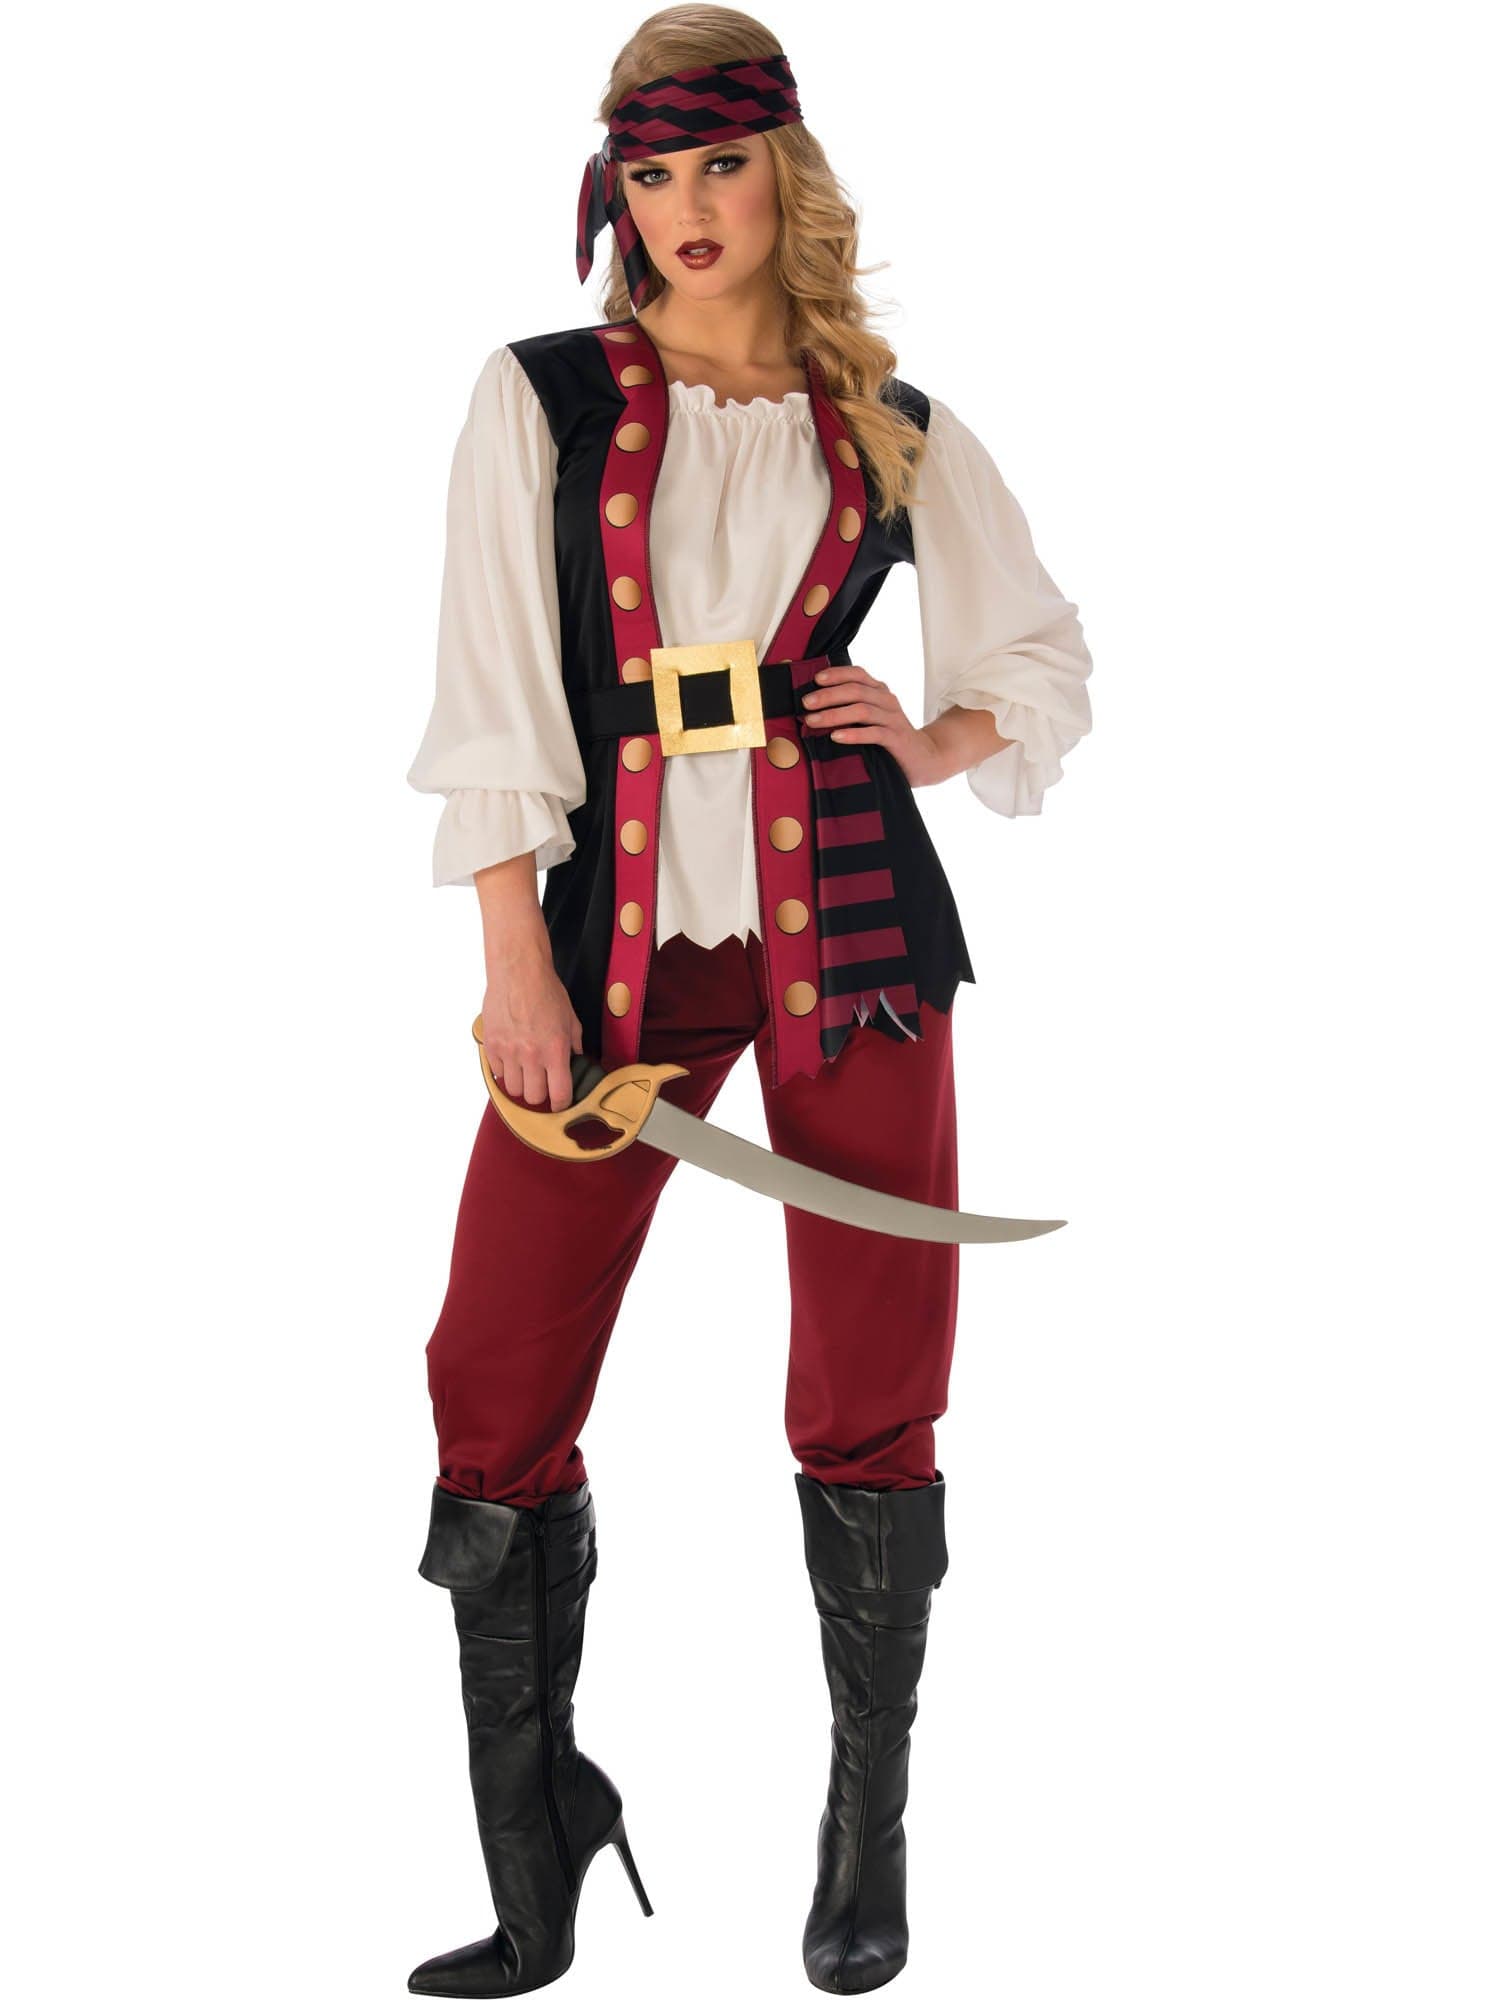 Adult Lusty Pirate Costume - costumes.com